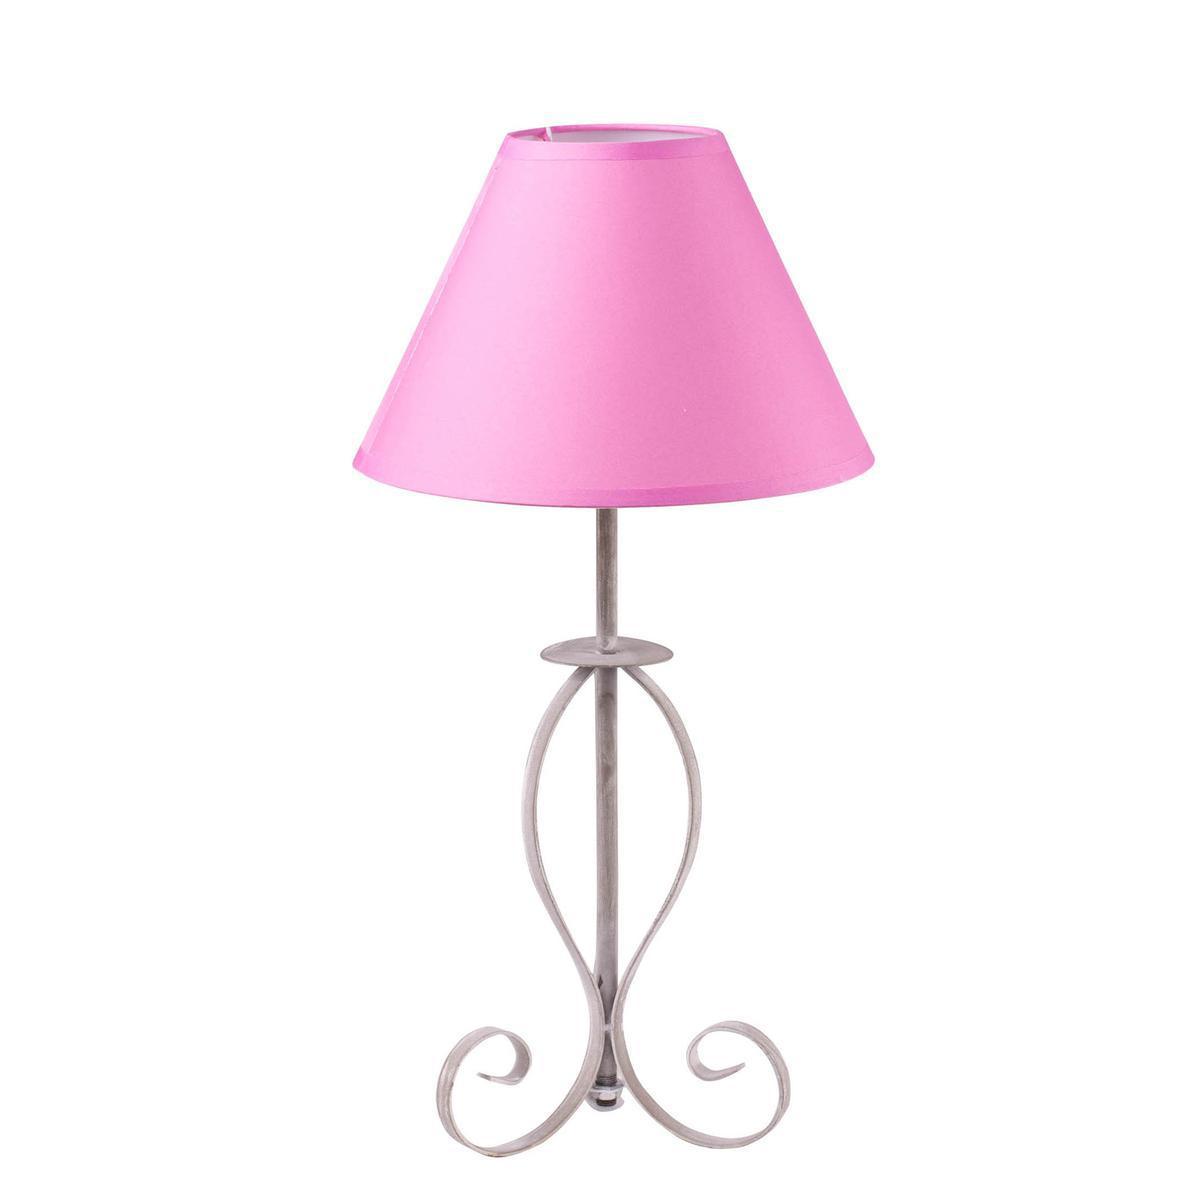 Lampe campagne - Acier et polyester - 25 x 25 x H 45 cm - Rose fuchsia